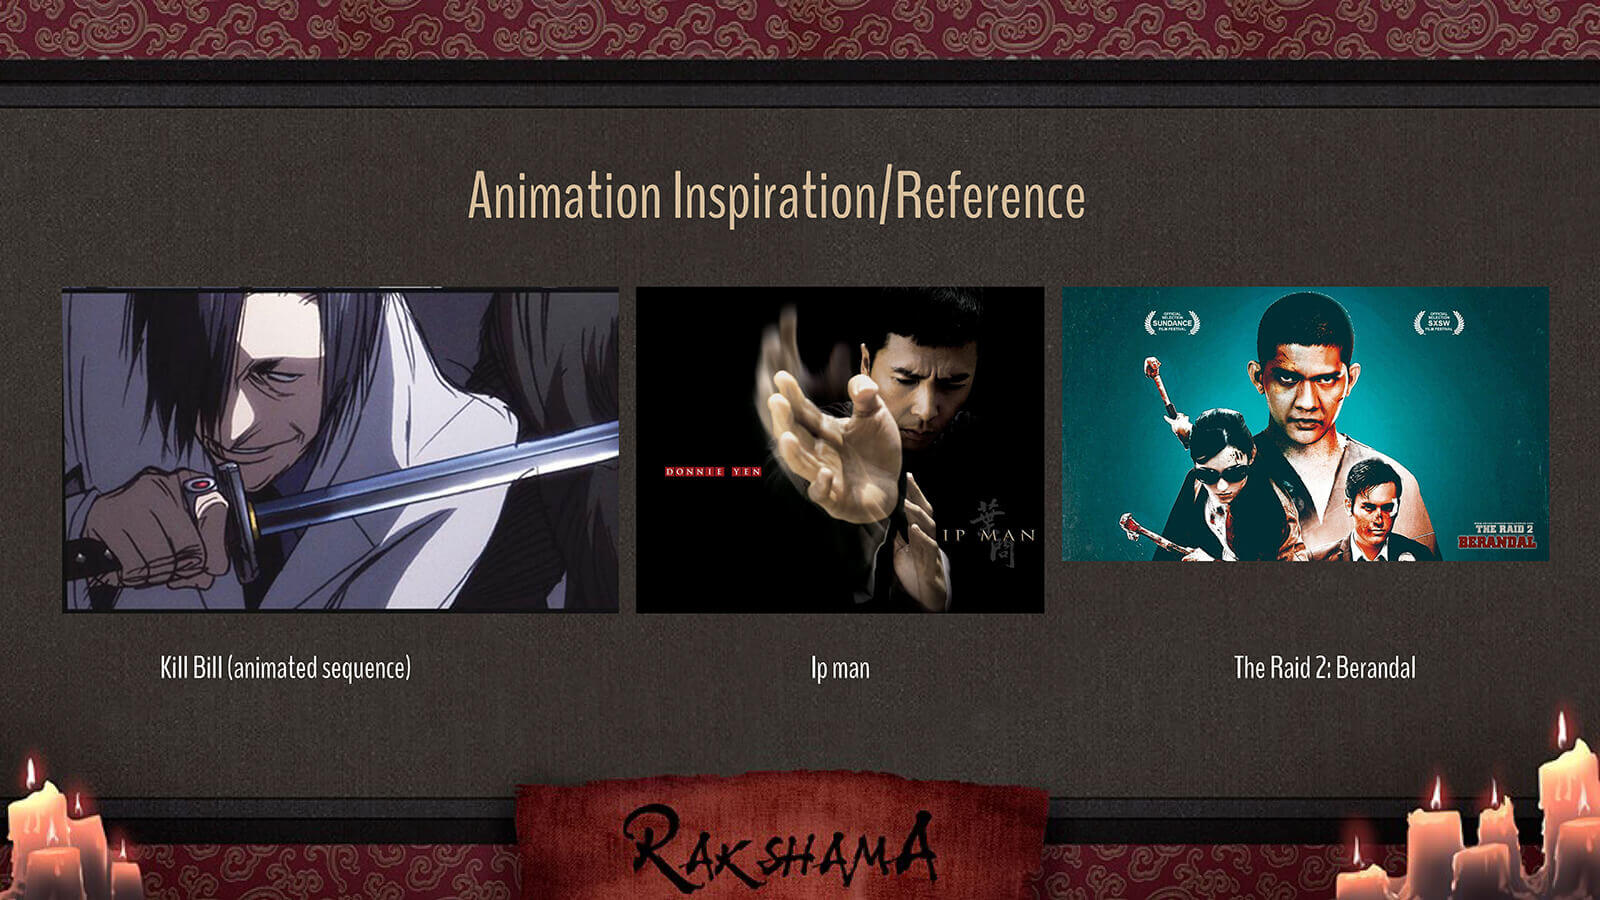 Animation Inspiration slide for the film Rakshama, including images of Kill Bill, Ip Man, and The Raid 2